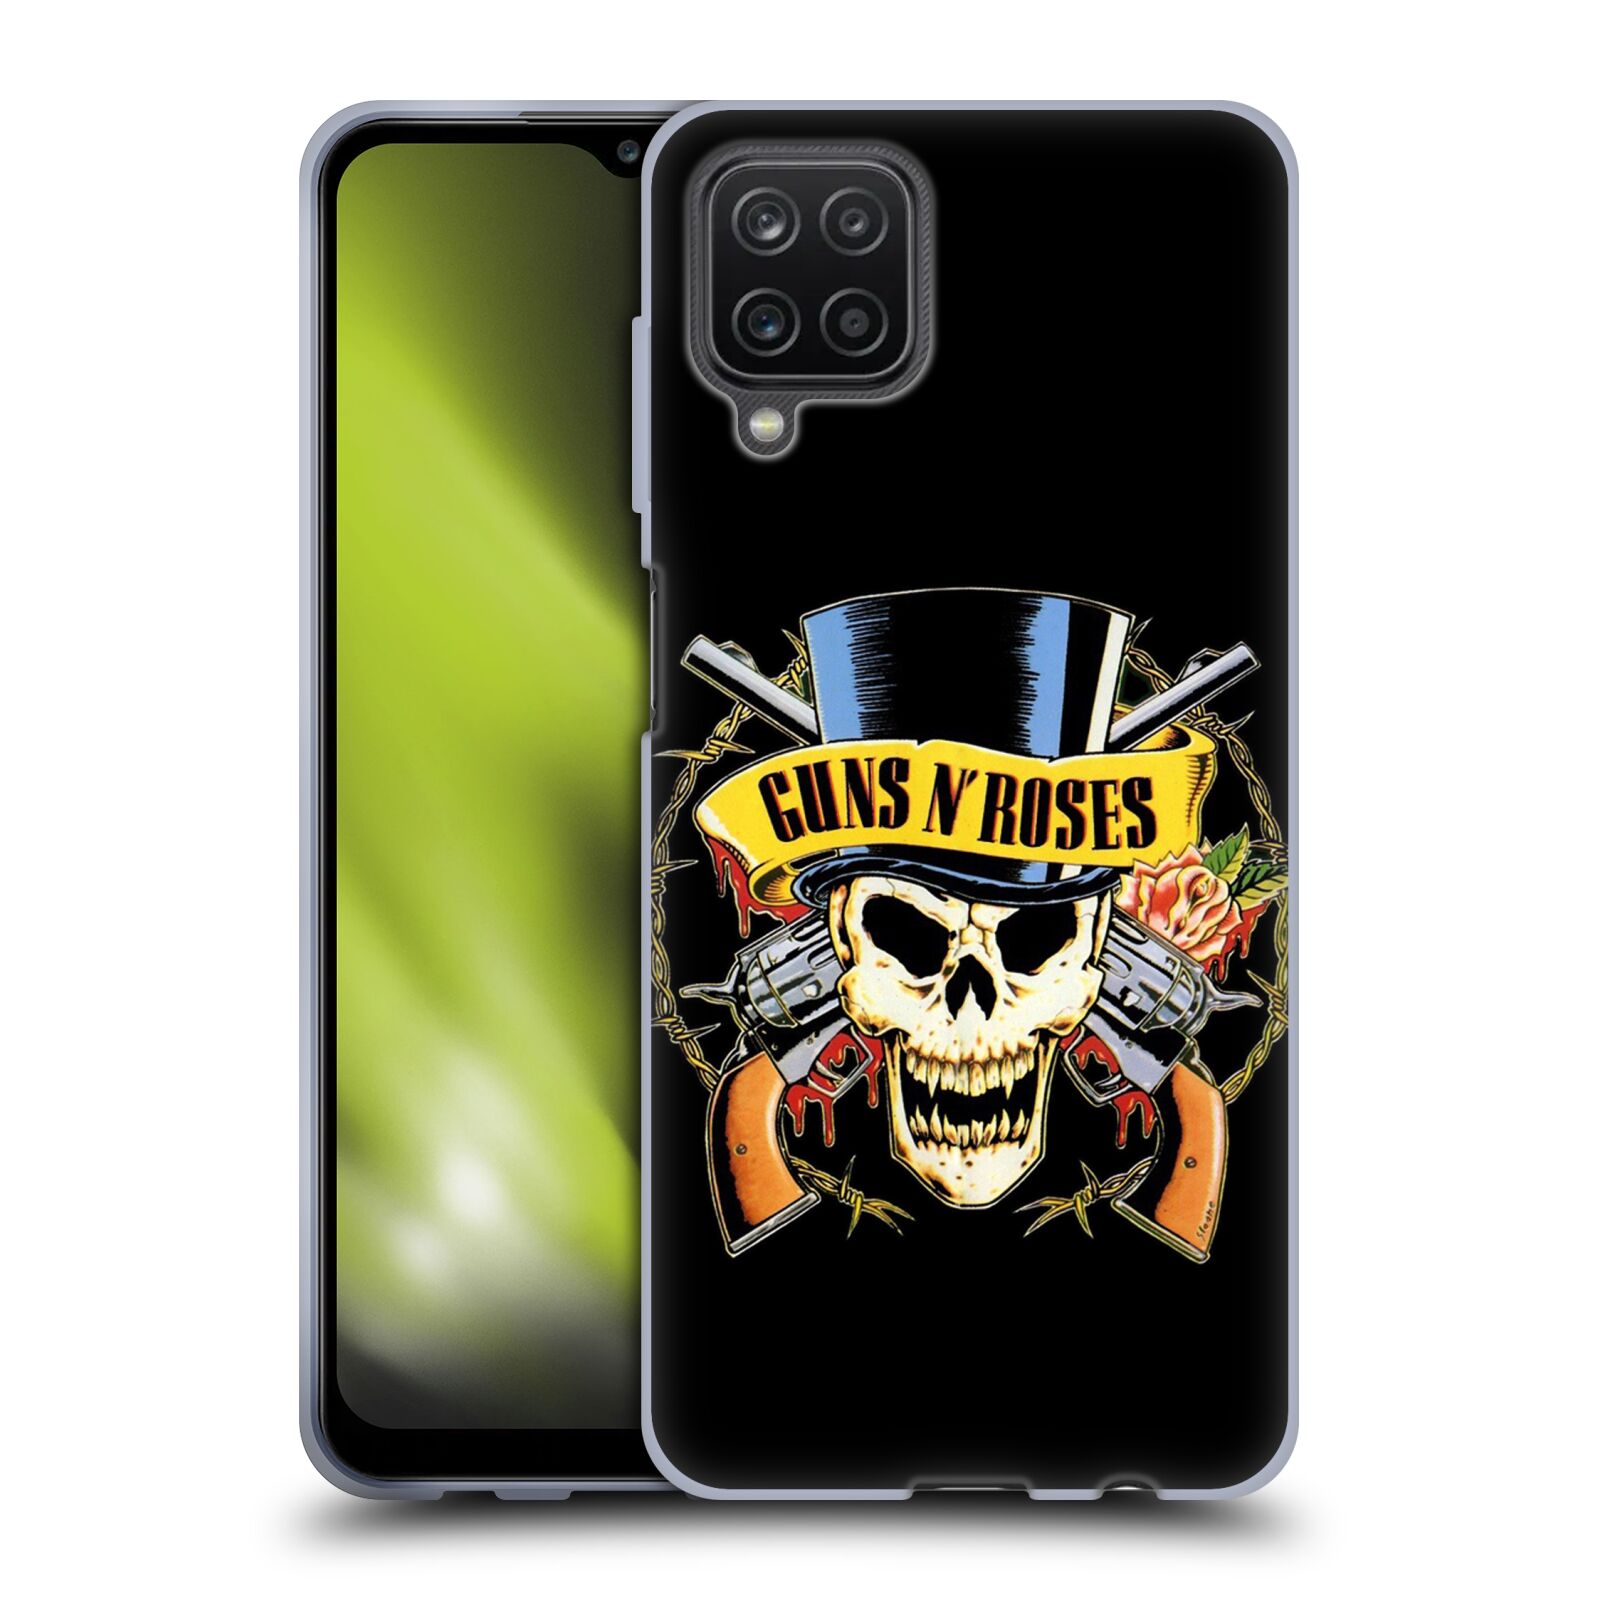 Silikonové pouzdro na mobil Samsung Galaxy A12 - Head Case - Guns N' Roses - Lebka (Silikonový kryt, obal, pouzdro na mobilní telefon Samsung Galaxy A12 s motivem Guns N' Roses - Lebka)